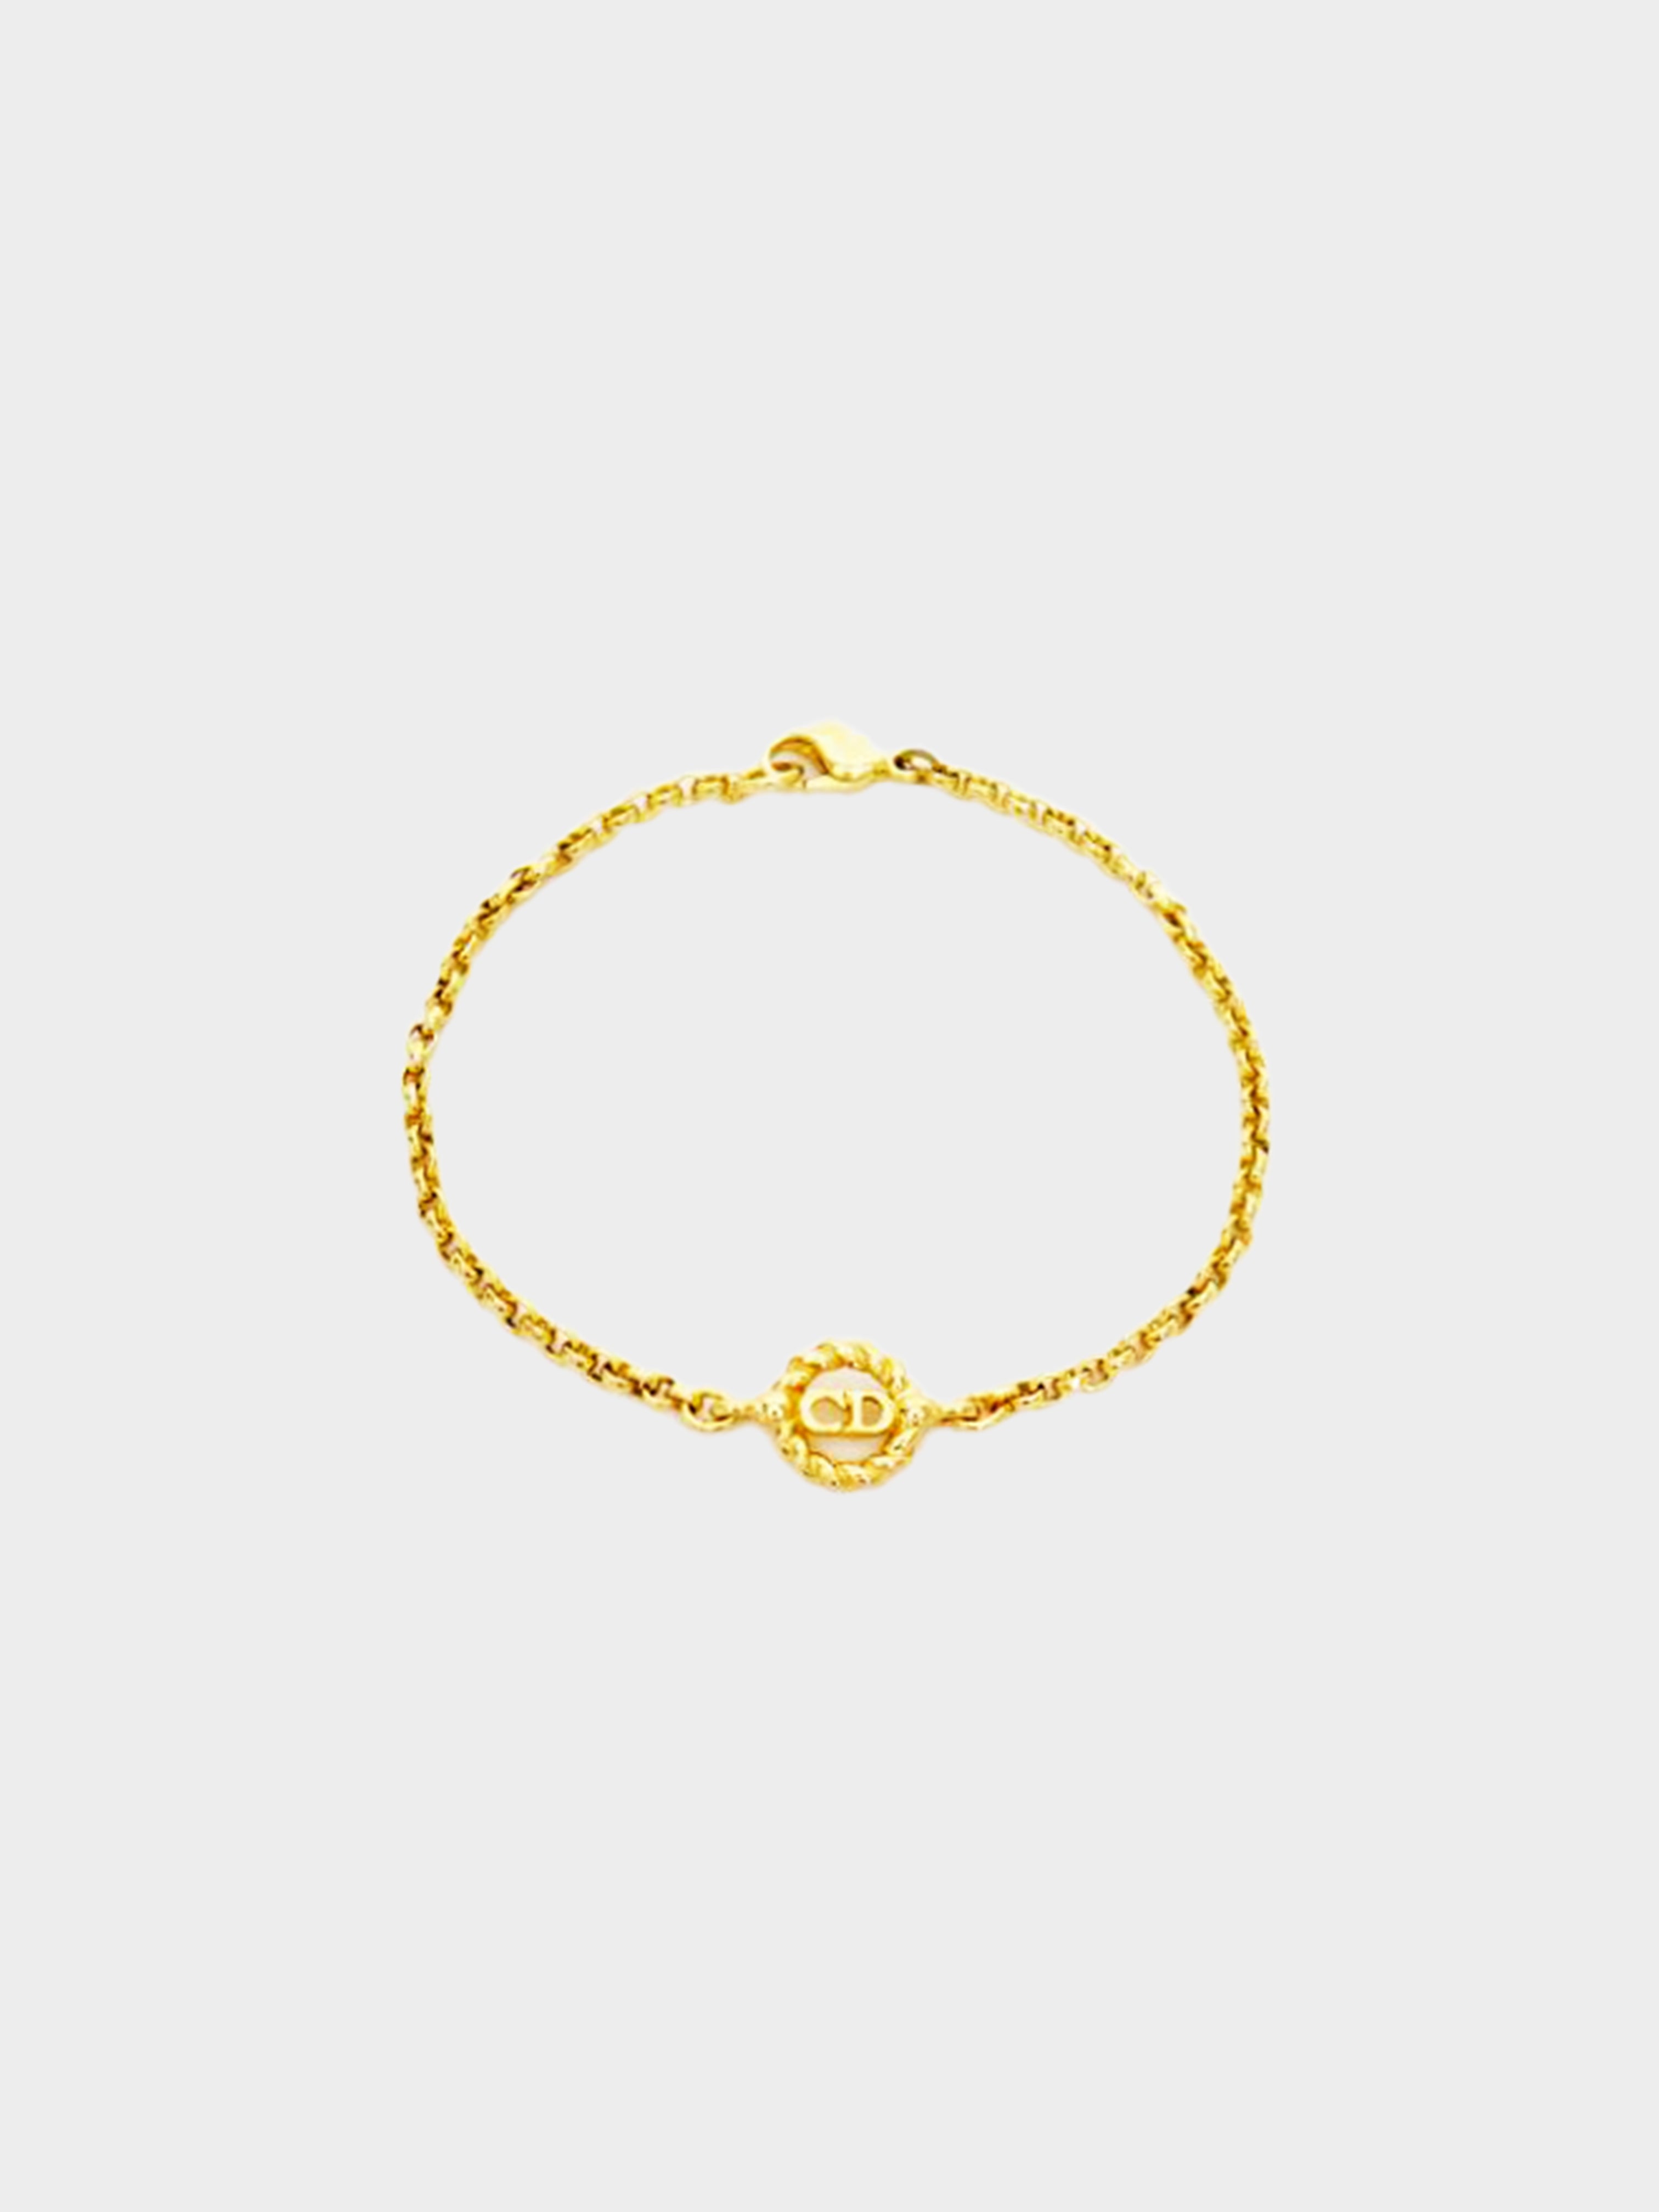 Christian Dior 1980s Gold CD Circle Bracelet